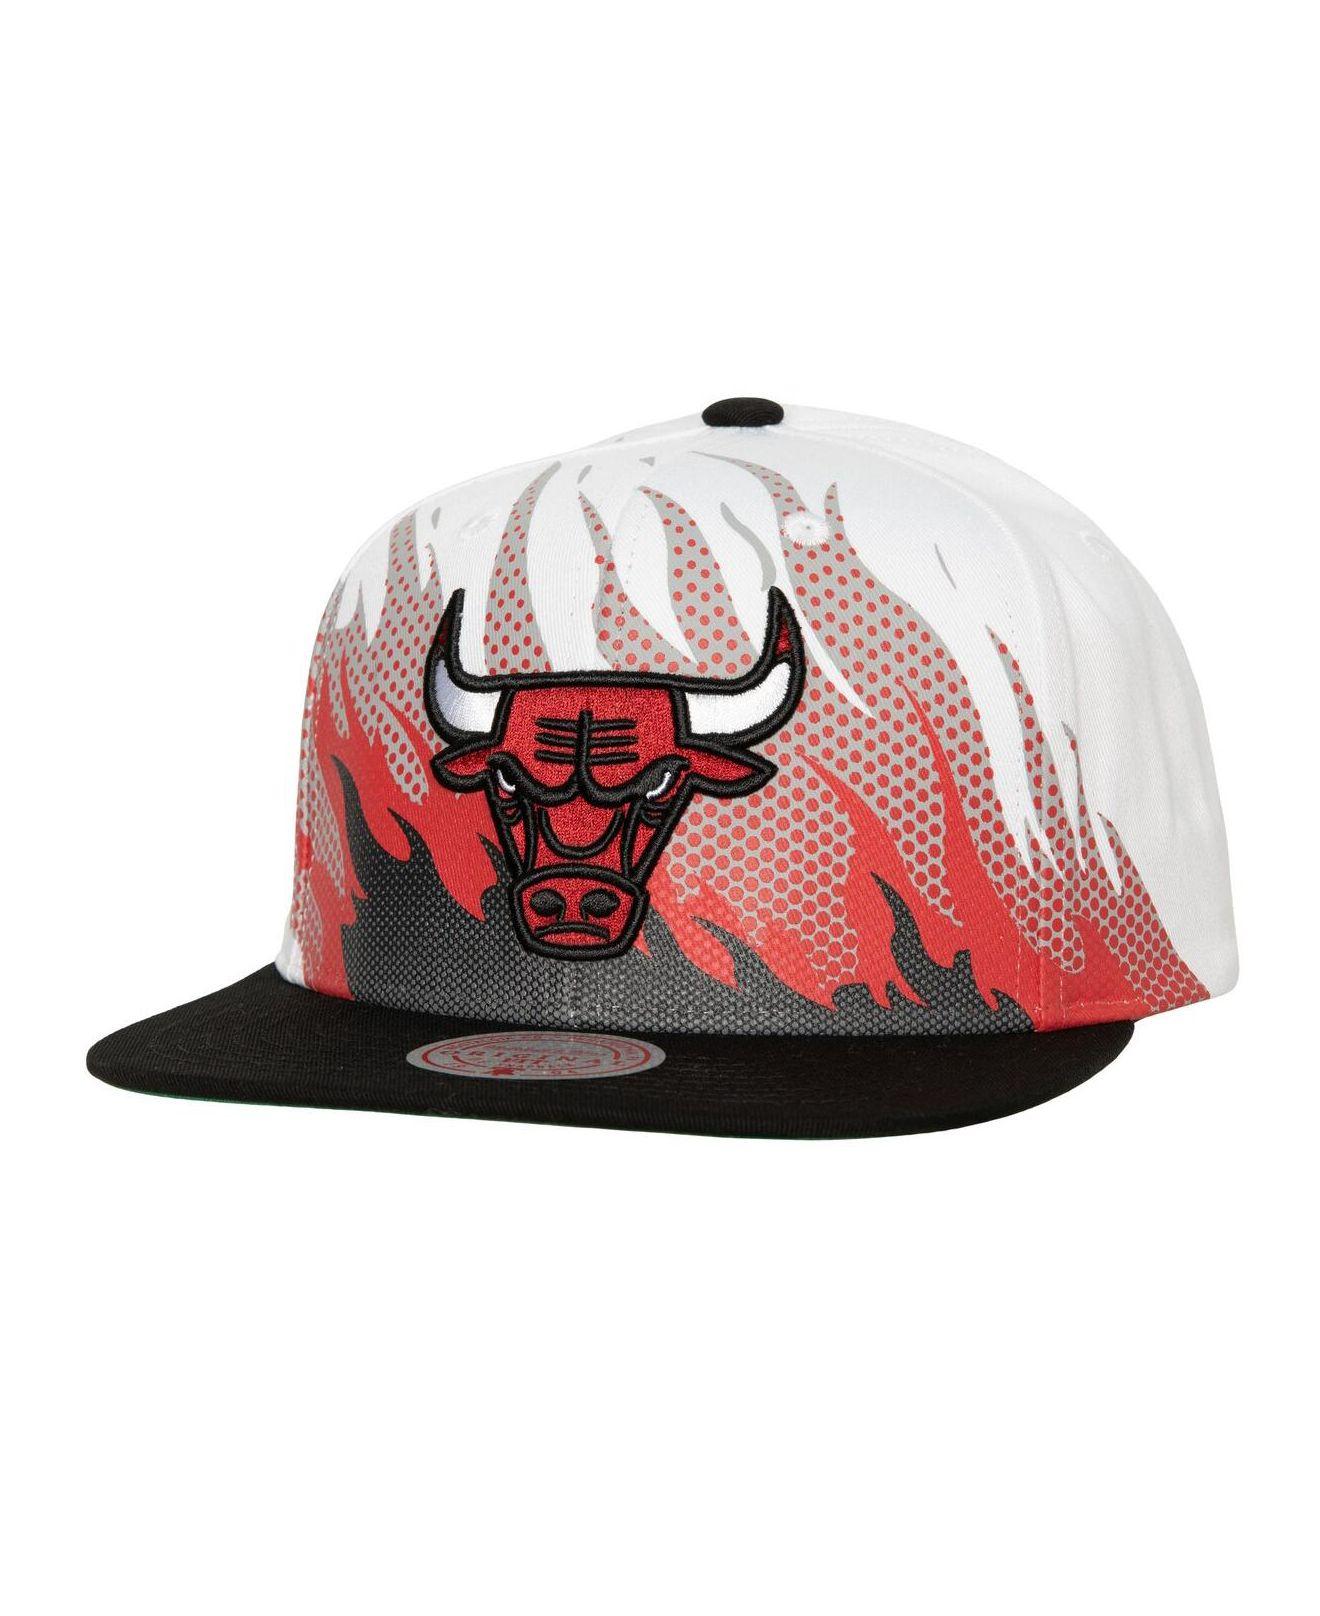 Lids Chicago Bulls Mitchell & Ness Hardwood Classics Snapback Hat -  White/Red